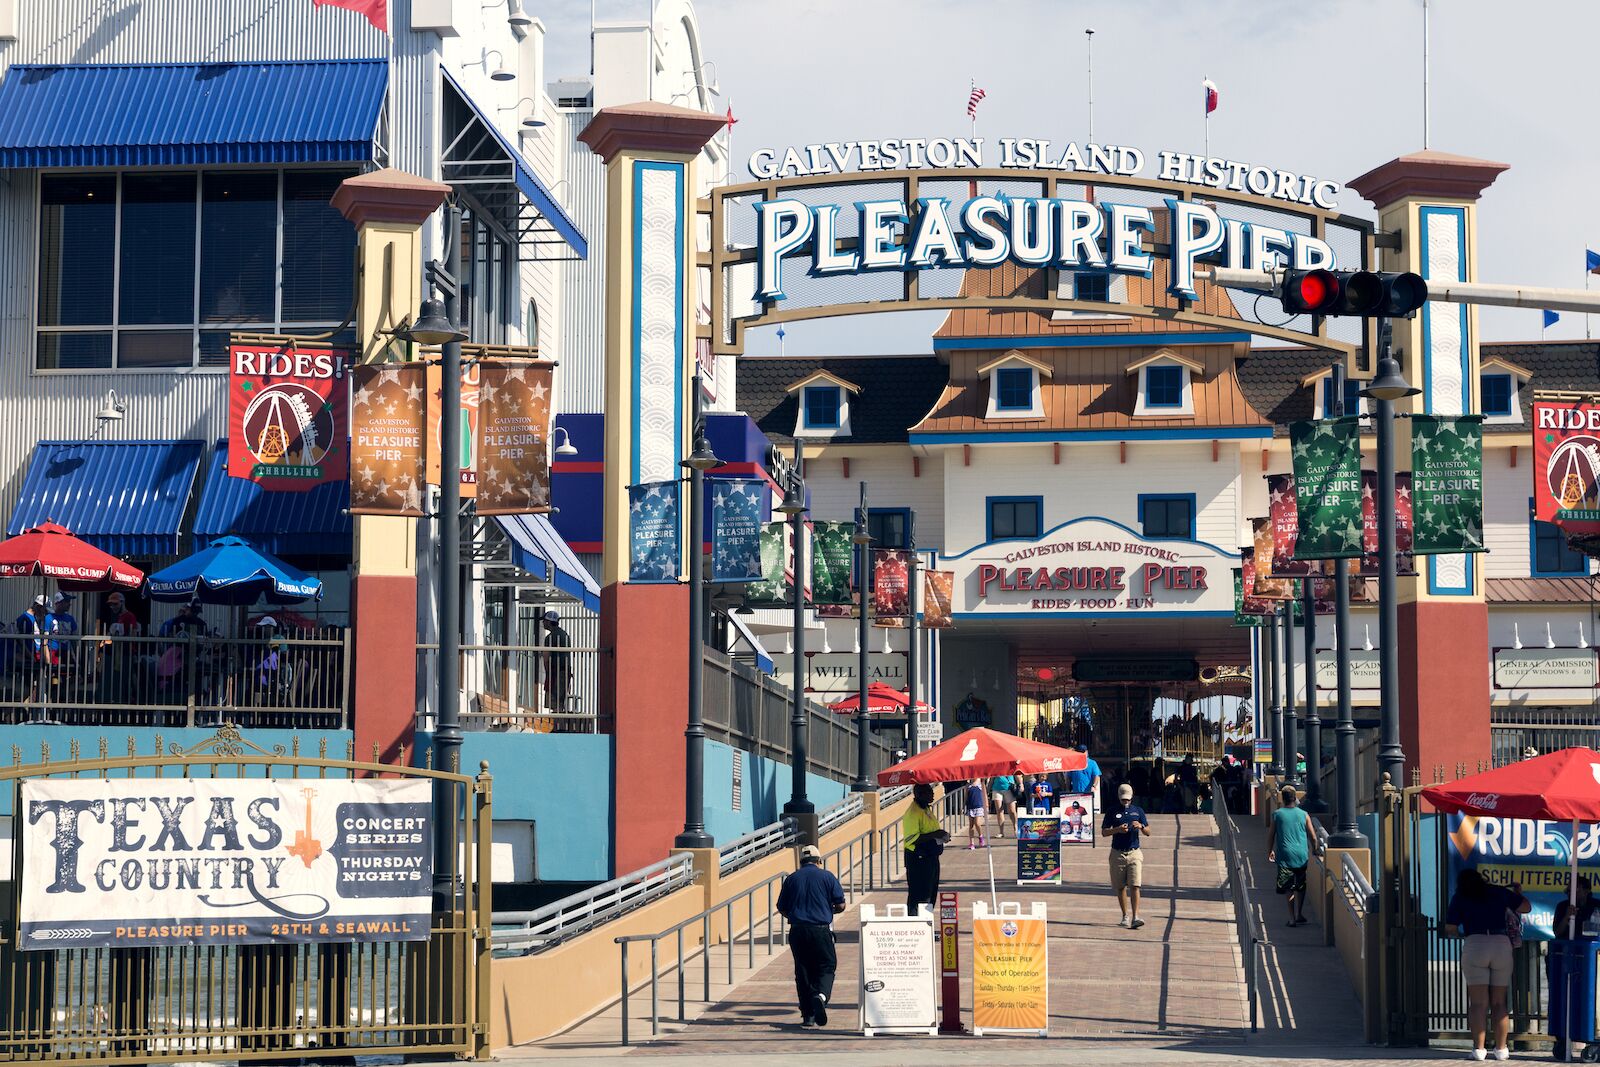 GALVESTON, TEXAS/USA - July 17, 2016: Galveston Island Historic Pleasure Pier